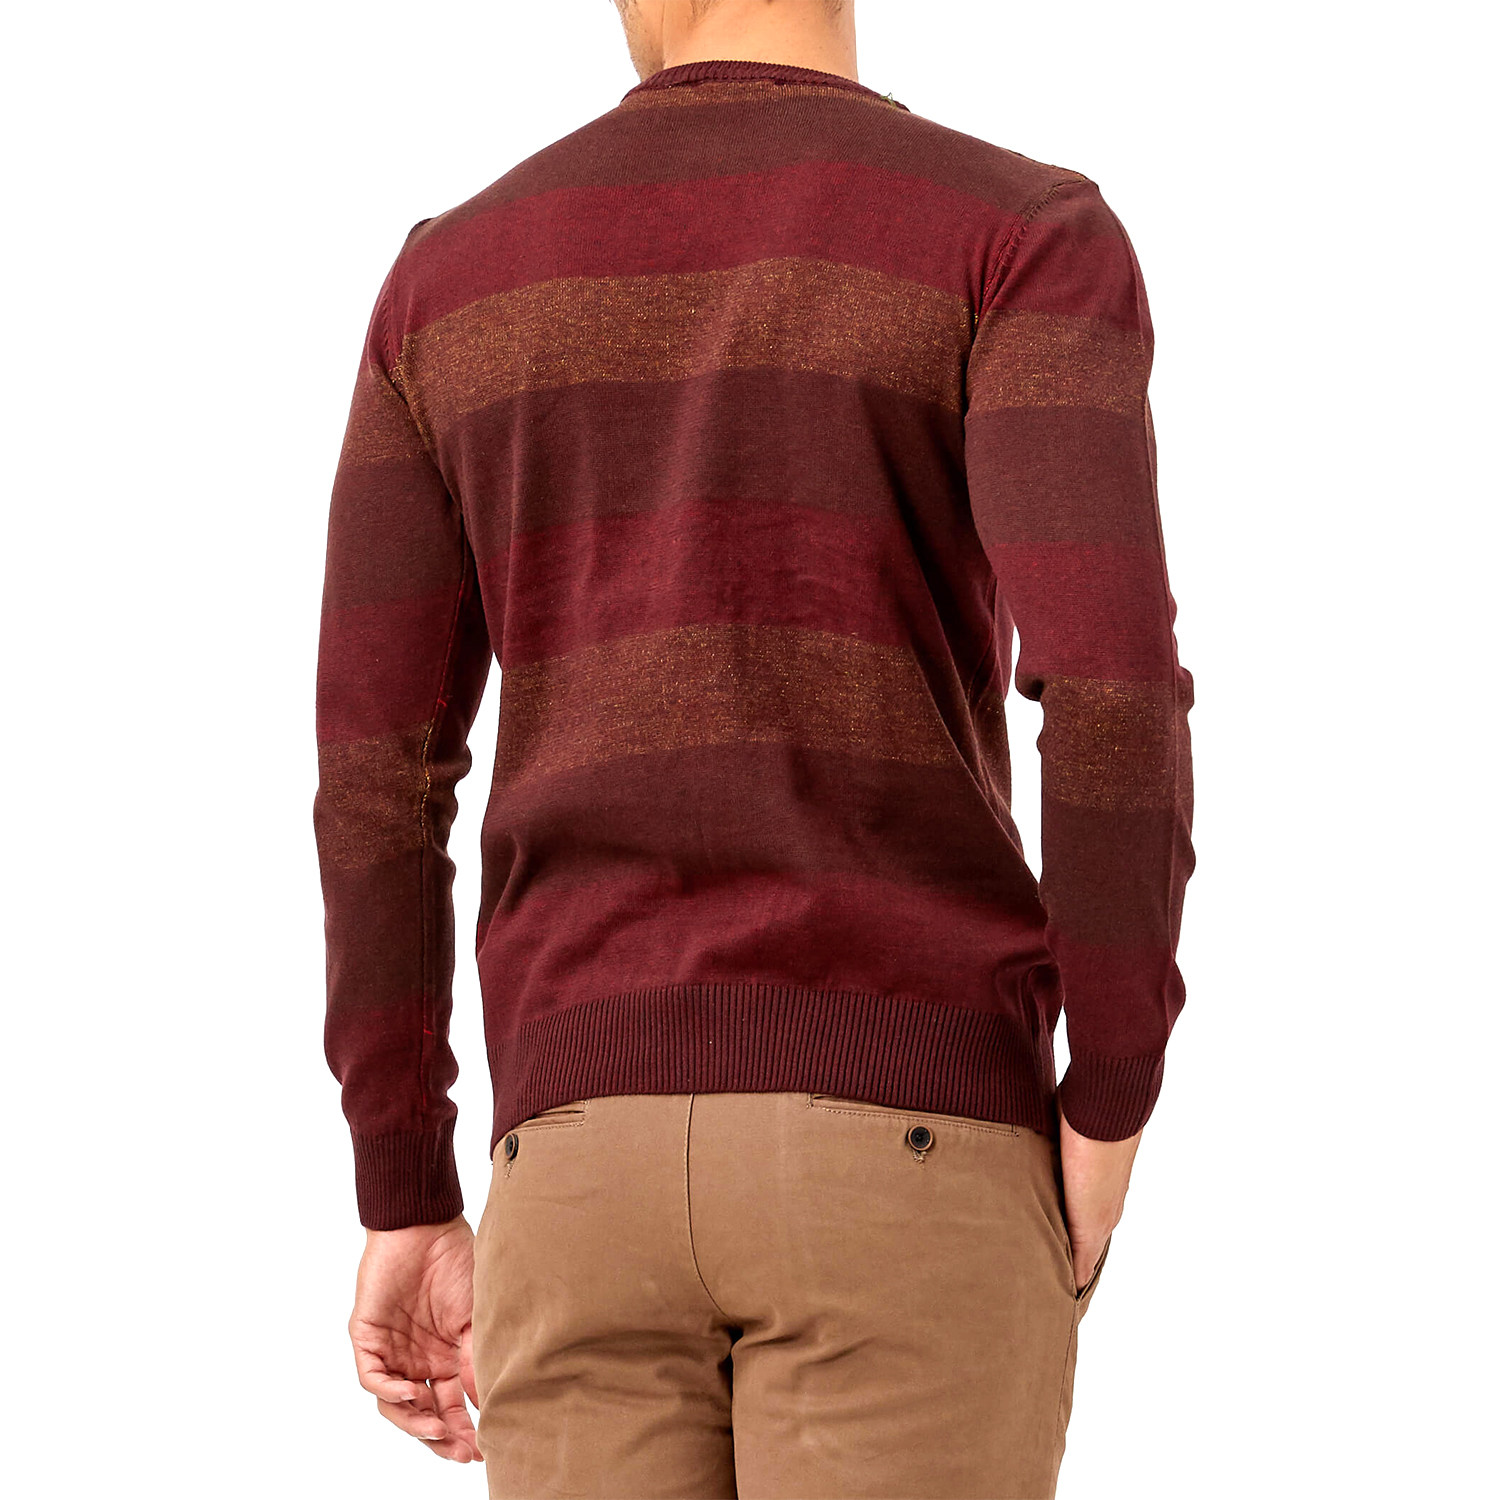 drew-sweater-claret-red-s-adze-touch-of-modern